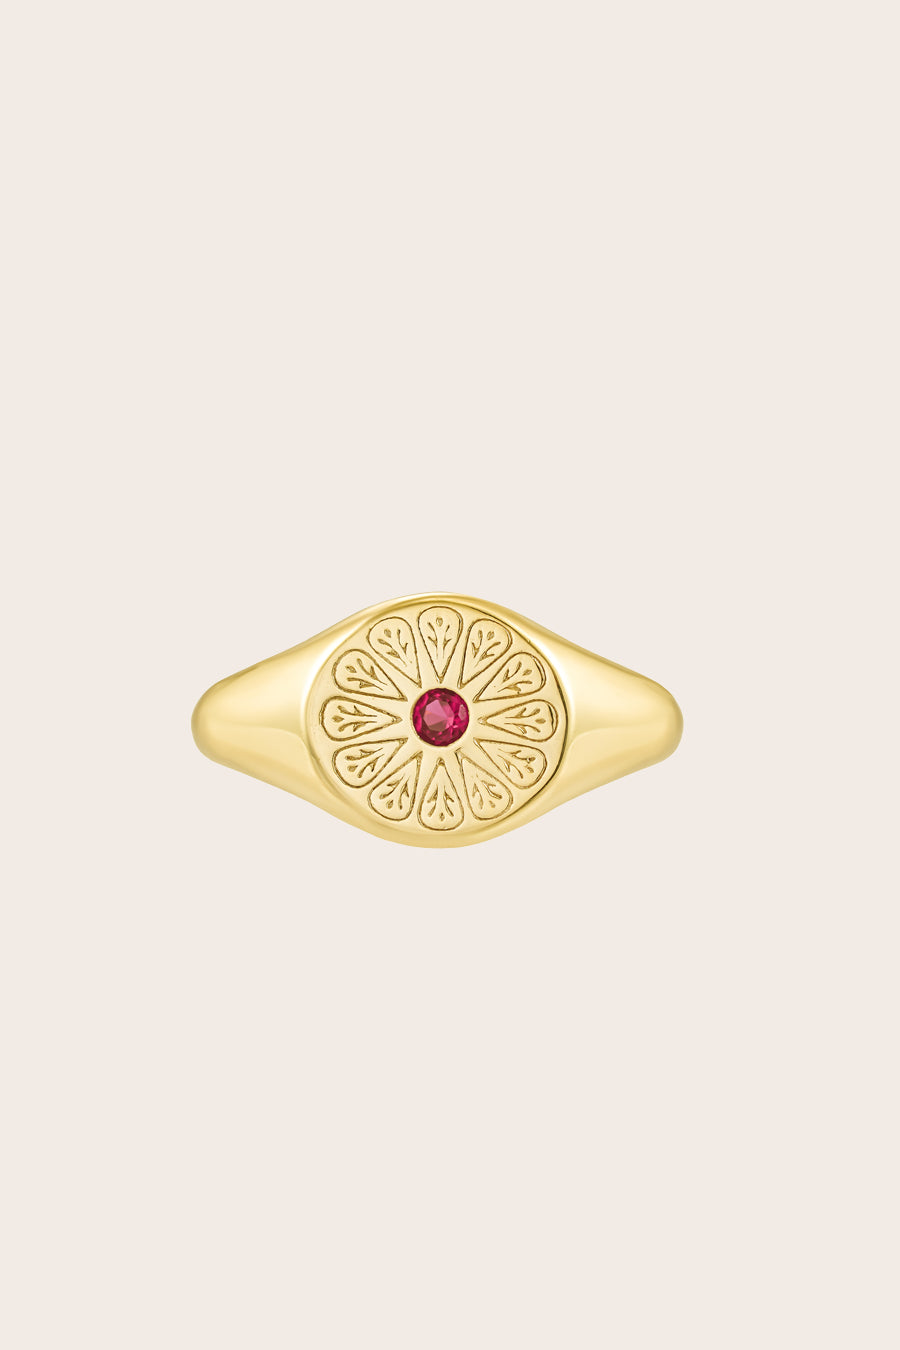 Gold July Ruby Signet Birthstone Ring on cream background